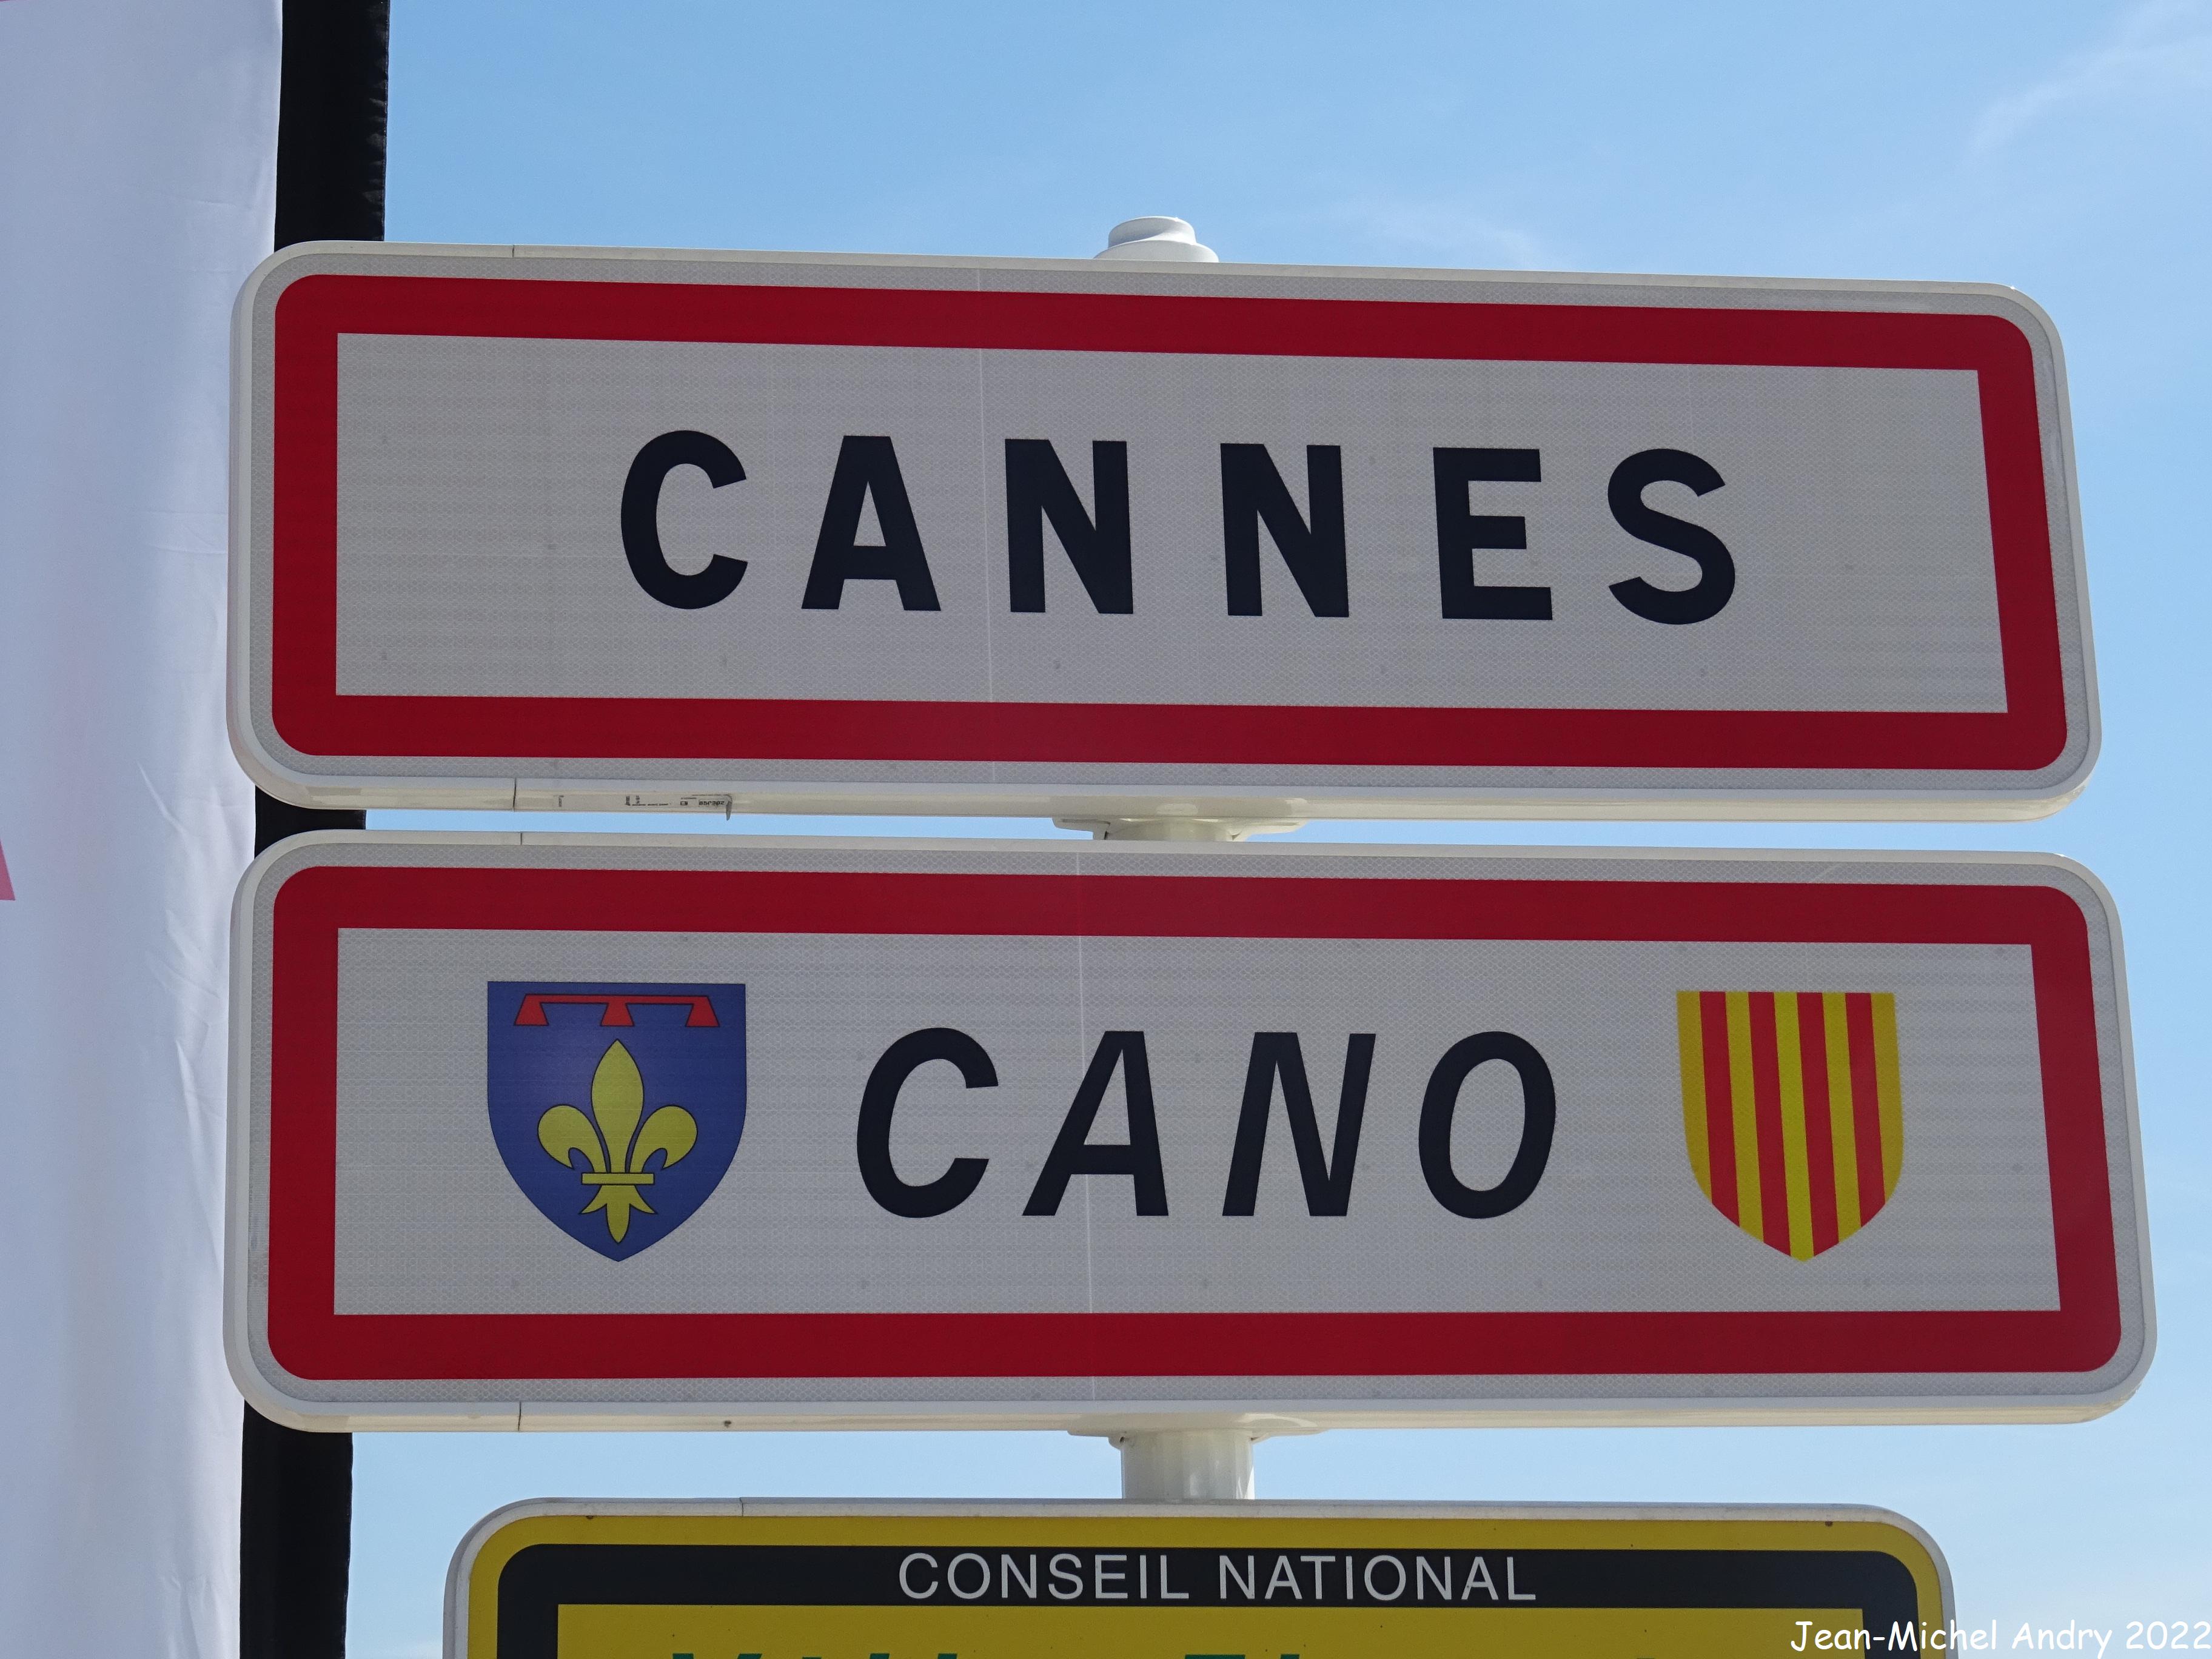 Cannes 06 - Jean-Michel Andry.jpg